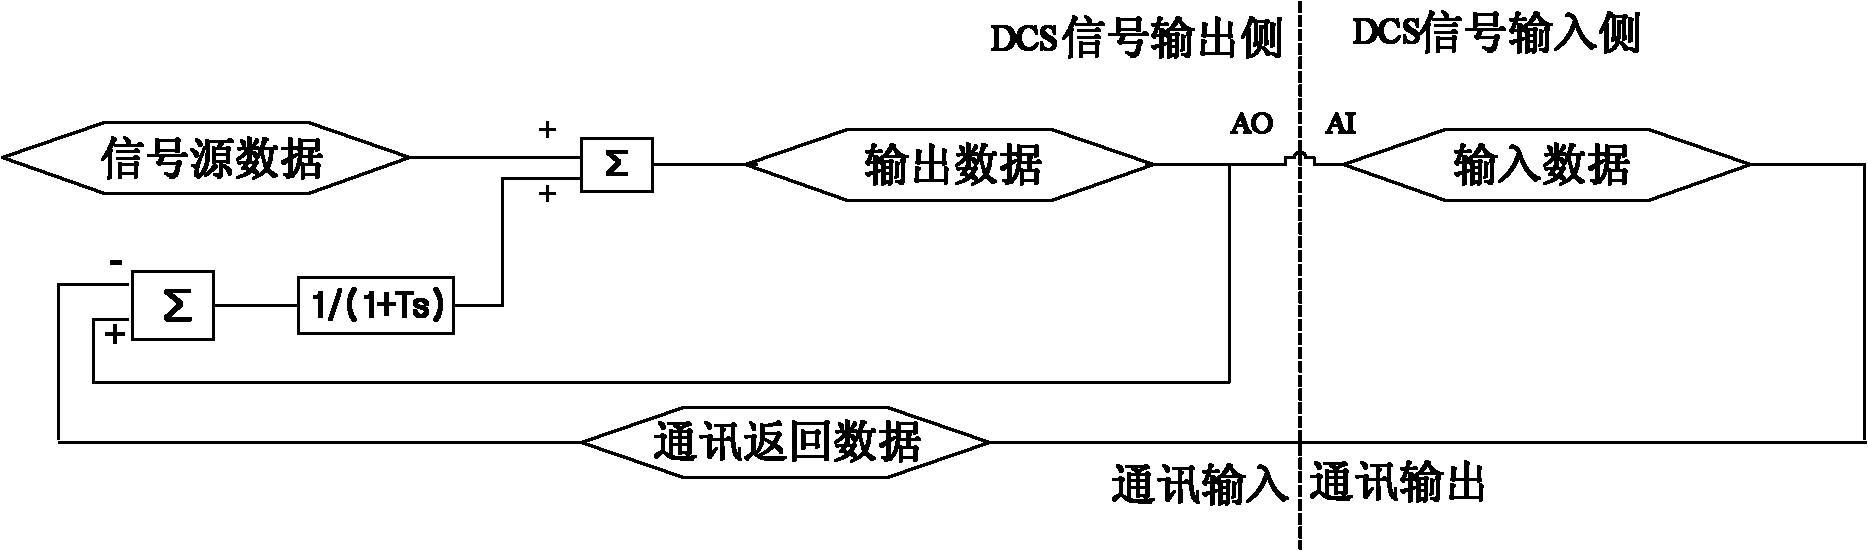 Method for correcting signal transmission error among DCS (Decentralized Control System) hardware